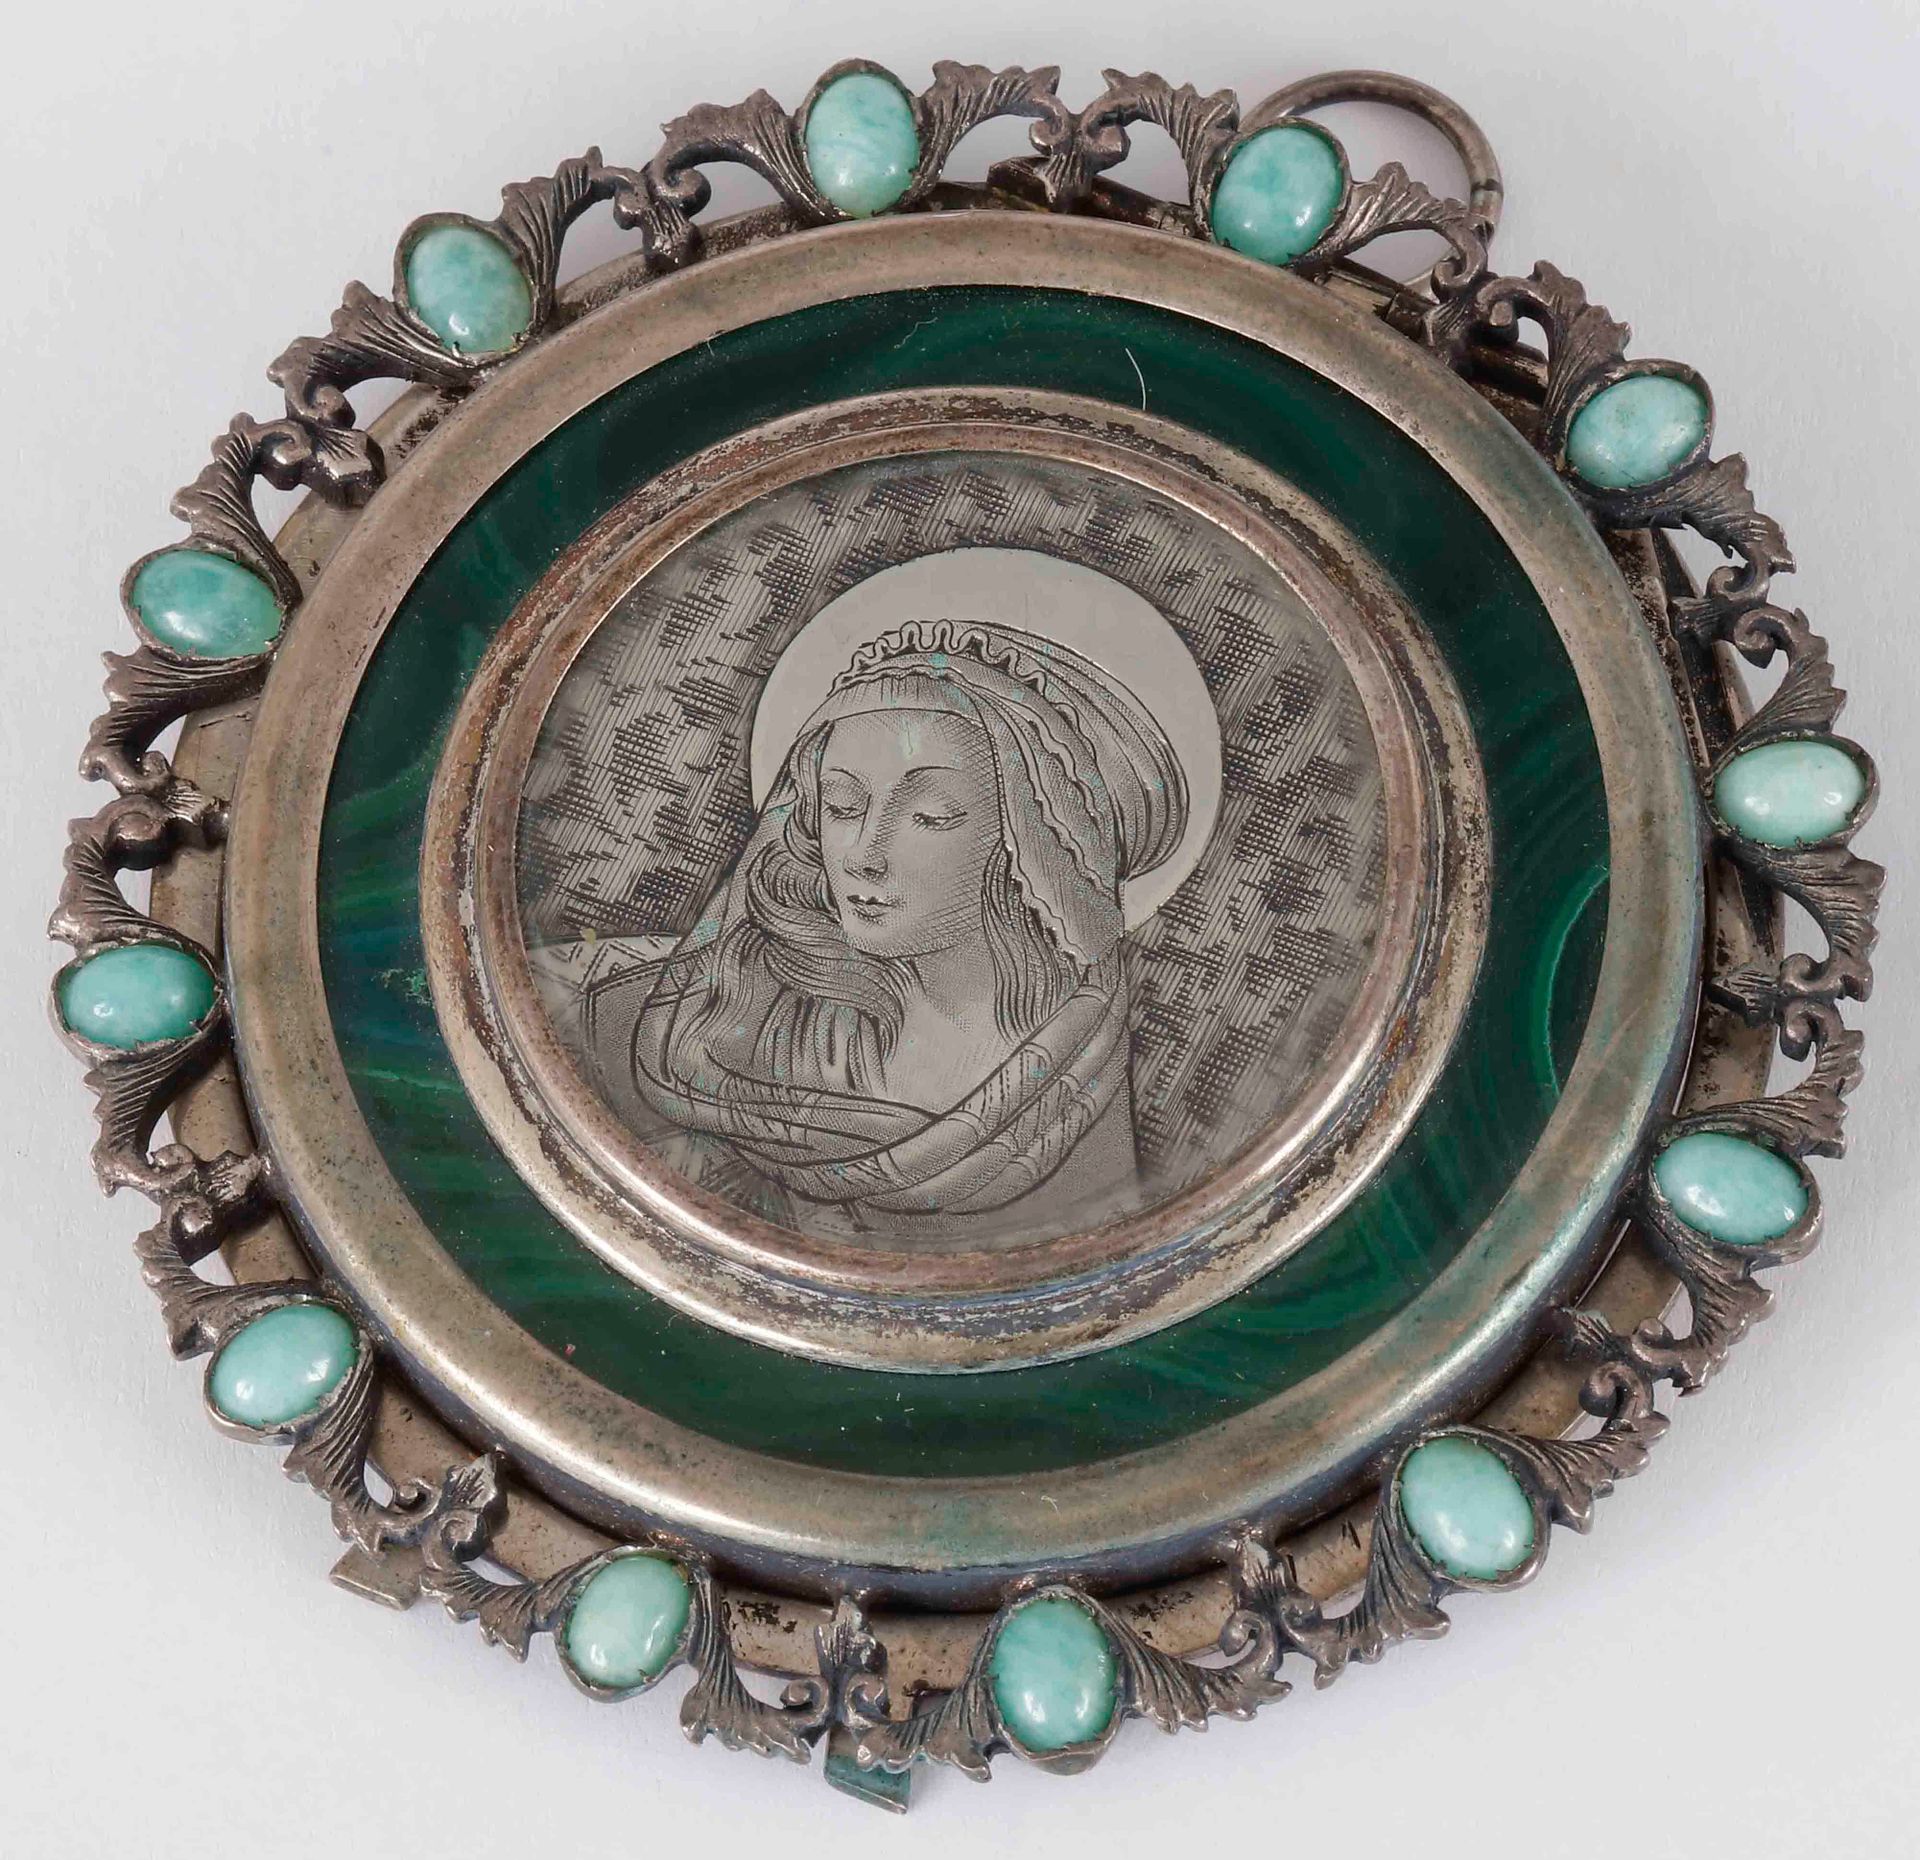 Null 圆形银质奖章上装饰有圣母玛利亚的图案，并镶嵌有孔雀石和绿色凸圆形宝石。

直径：7厘米。

毛重：72克